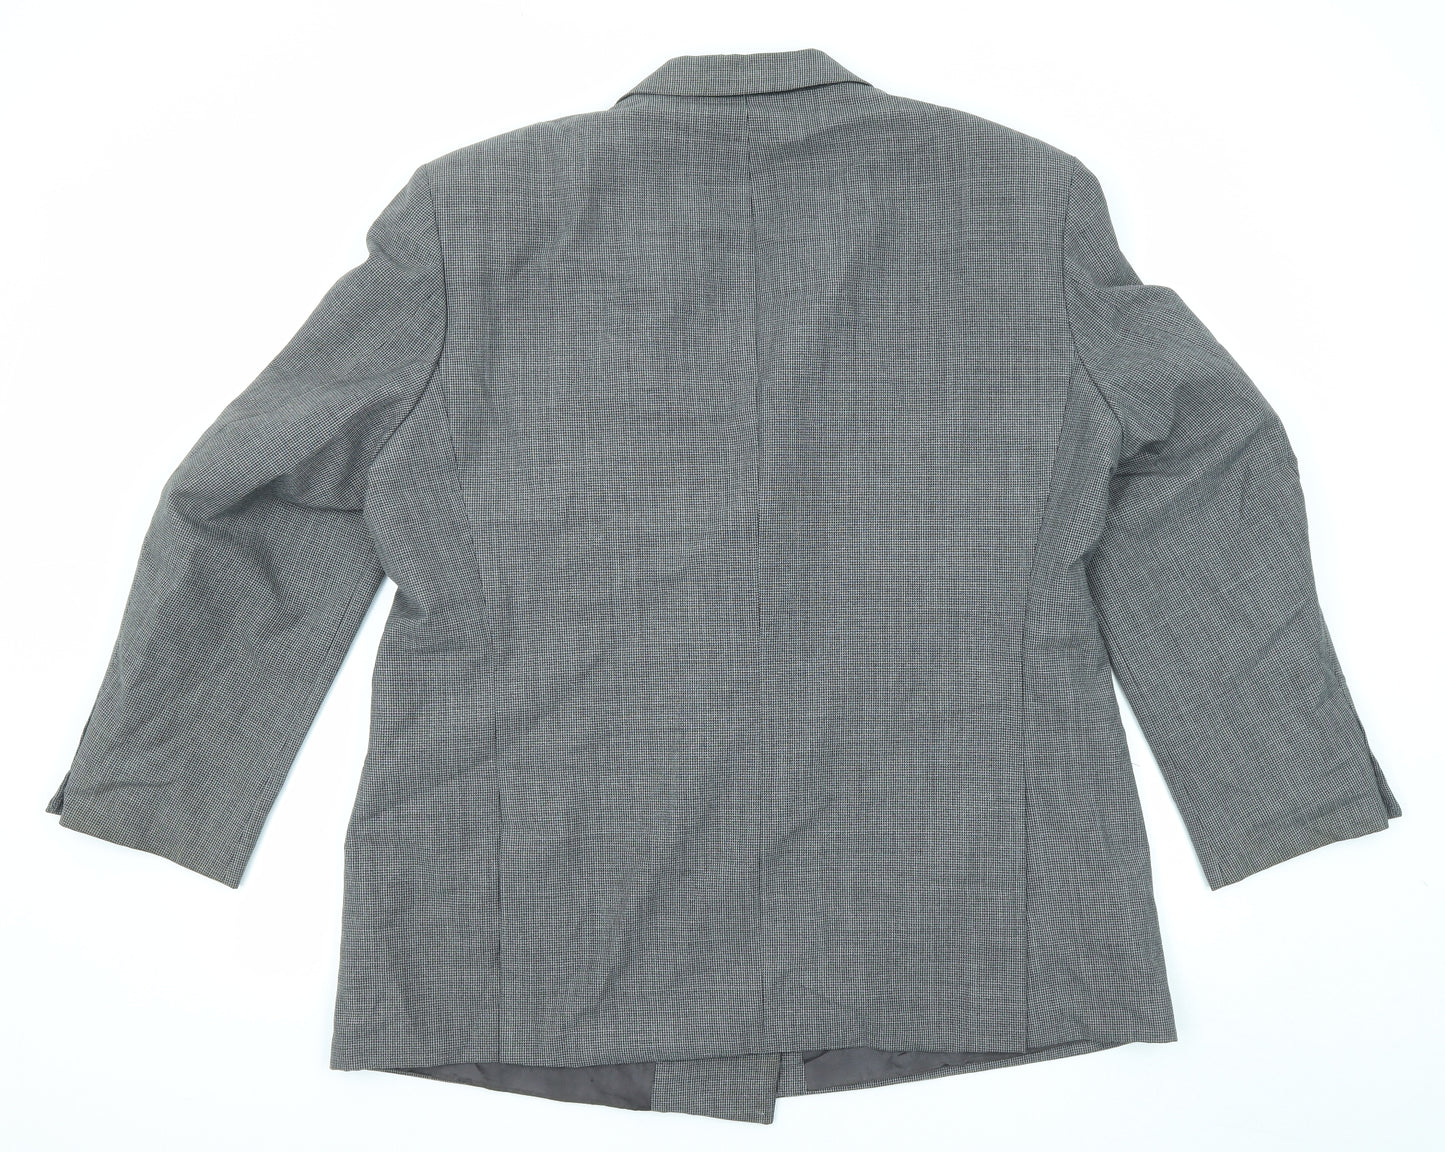 Marks and Spencer Mens Grey Geometric Polyester Jacket Suit Jacket Size 46 Regular